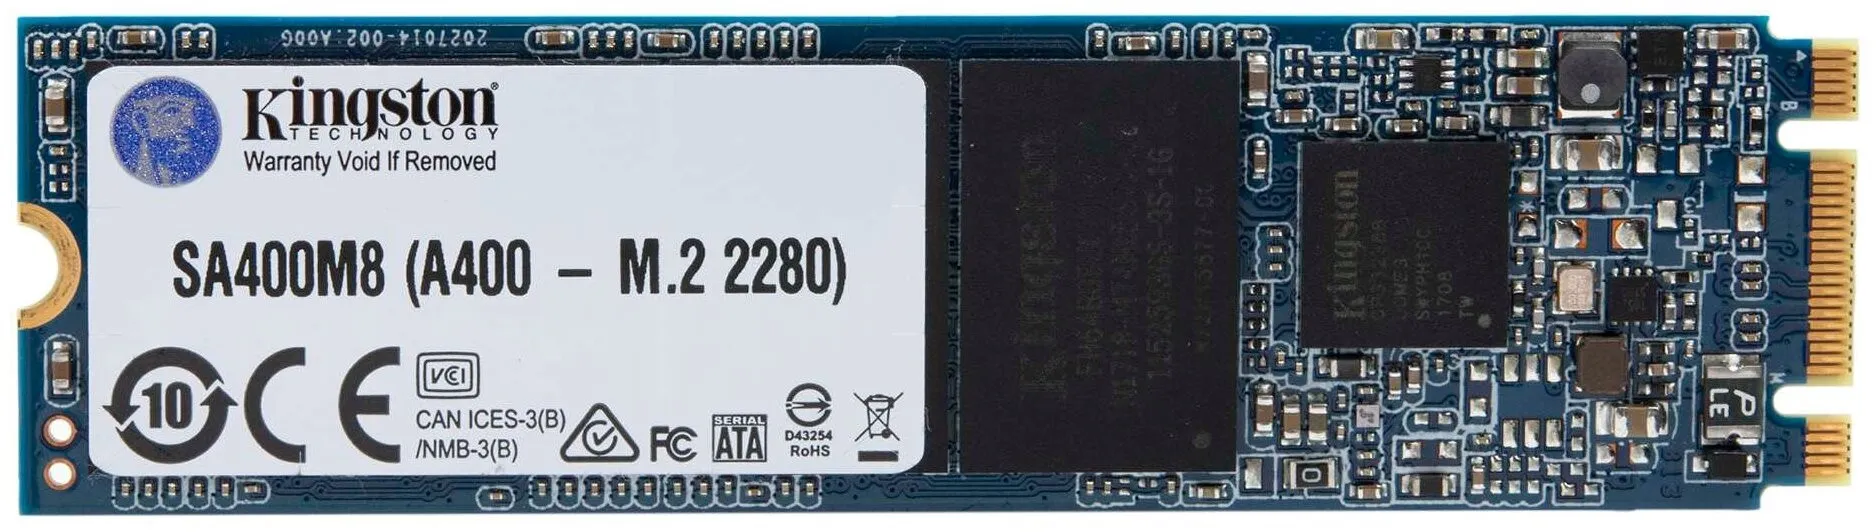 Твёрдый накопитель SSD M.2 Kingston SA400M8/240G | 240 GB#1